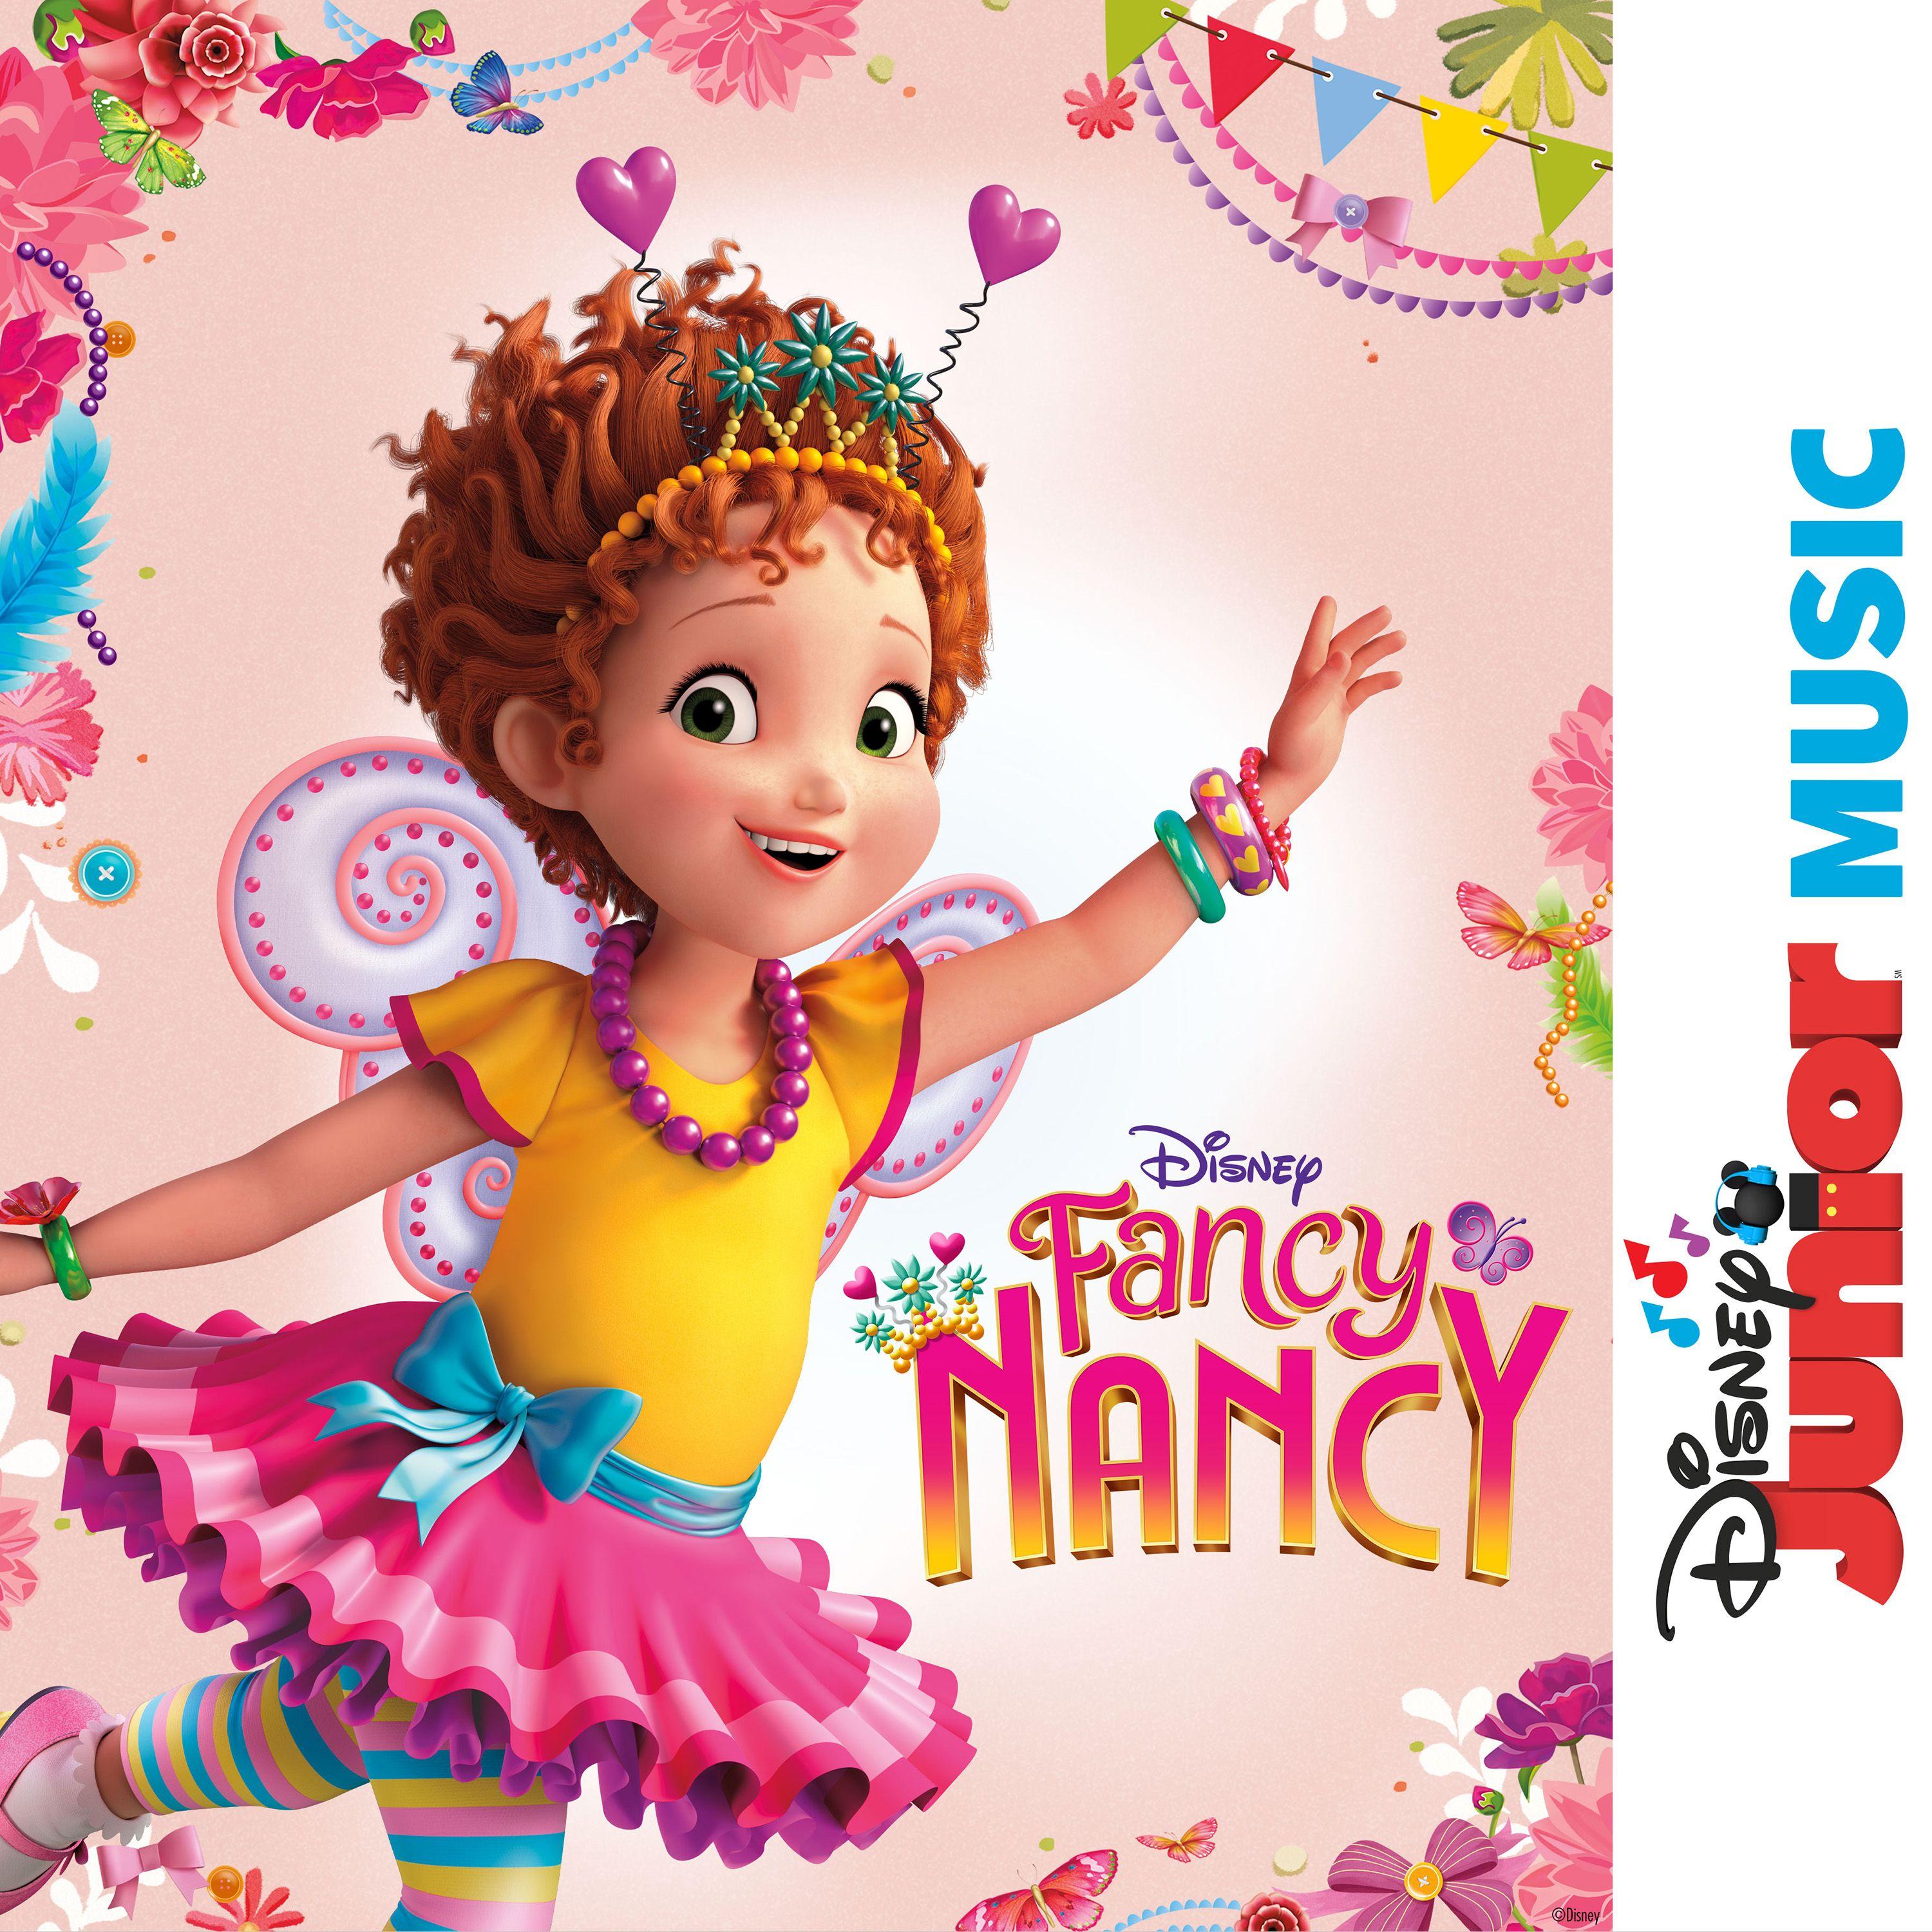 Ooh La La! The Fancy Nancy soundtrack is now available! Listen to